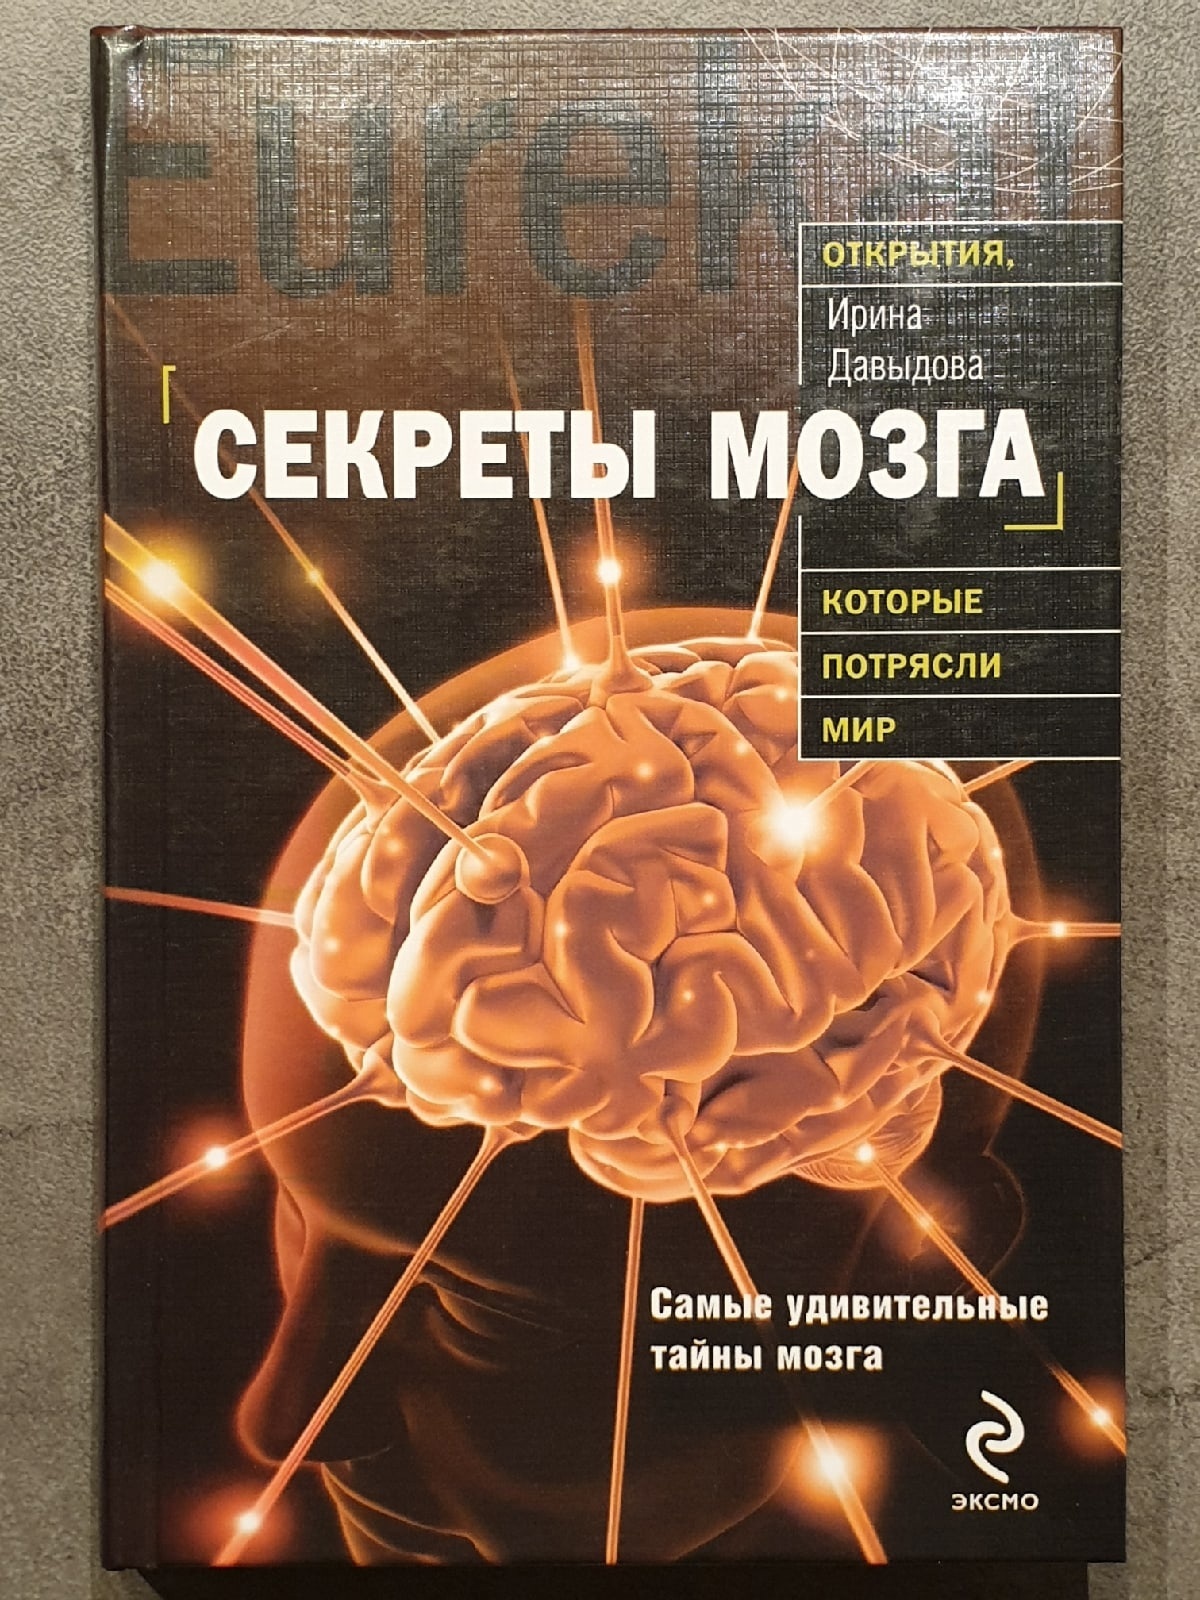 Book brain. Секреты мозга книга. Книга про мозг человека. Тайны человеческого мозга книга. Книга секреты человека мозг.